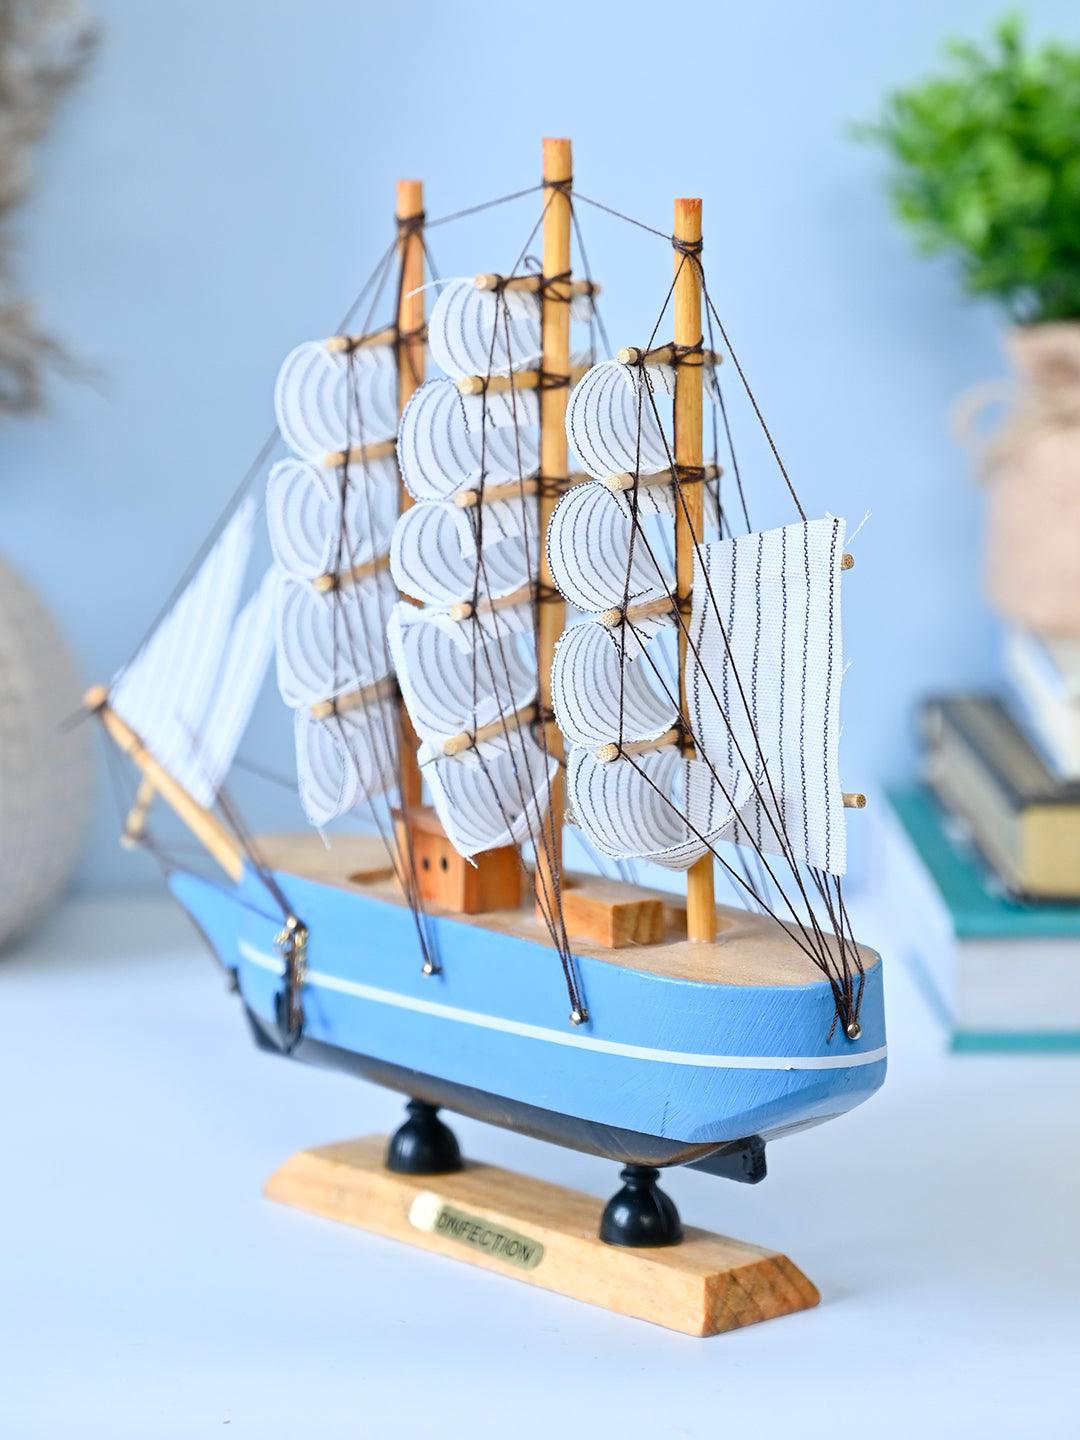 Market99 Wooden Decorative Sailing Ship